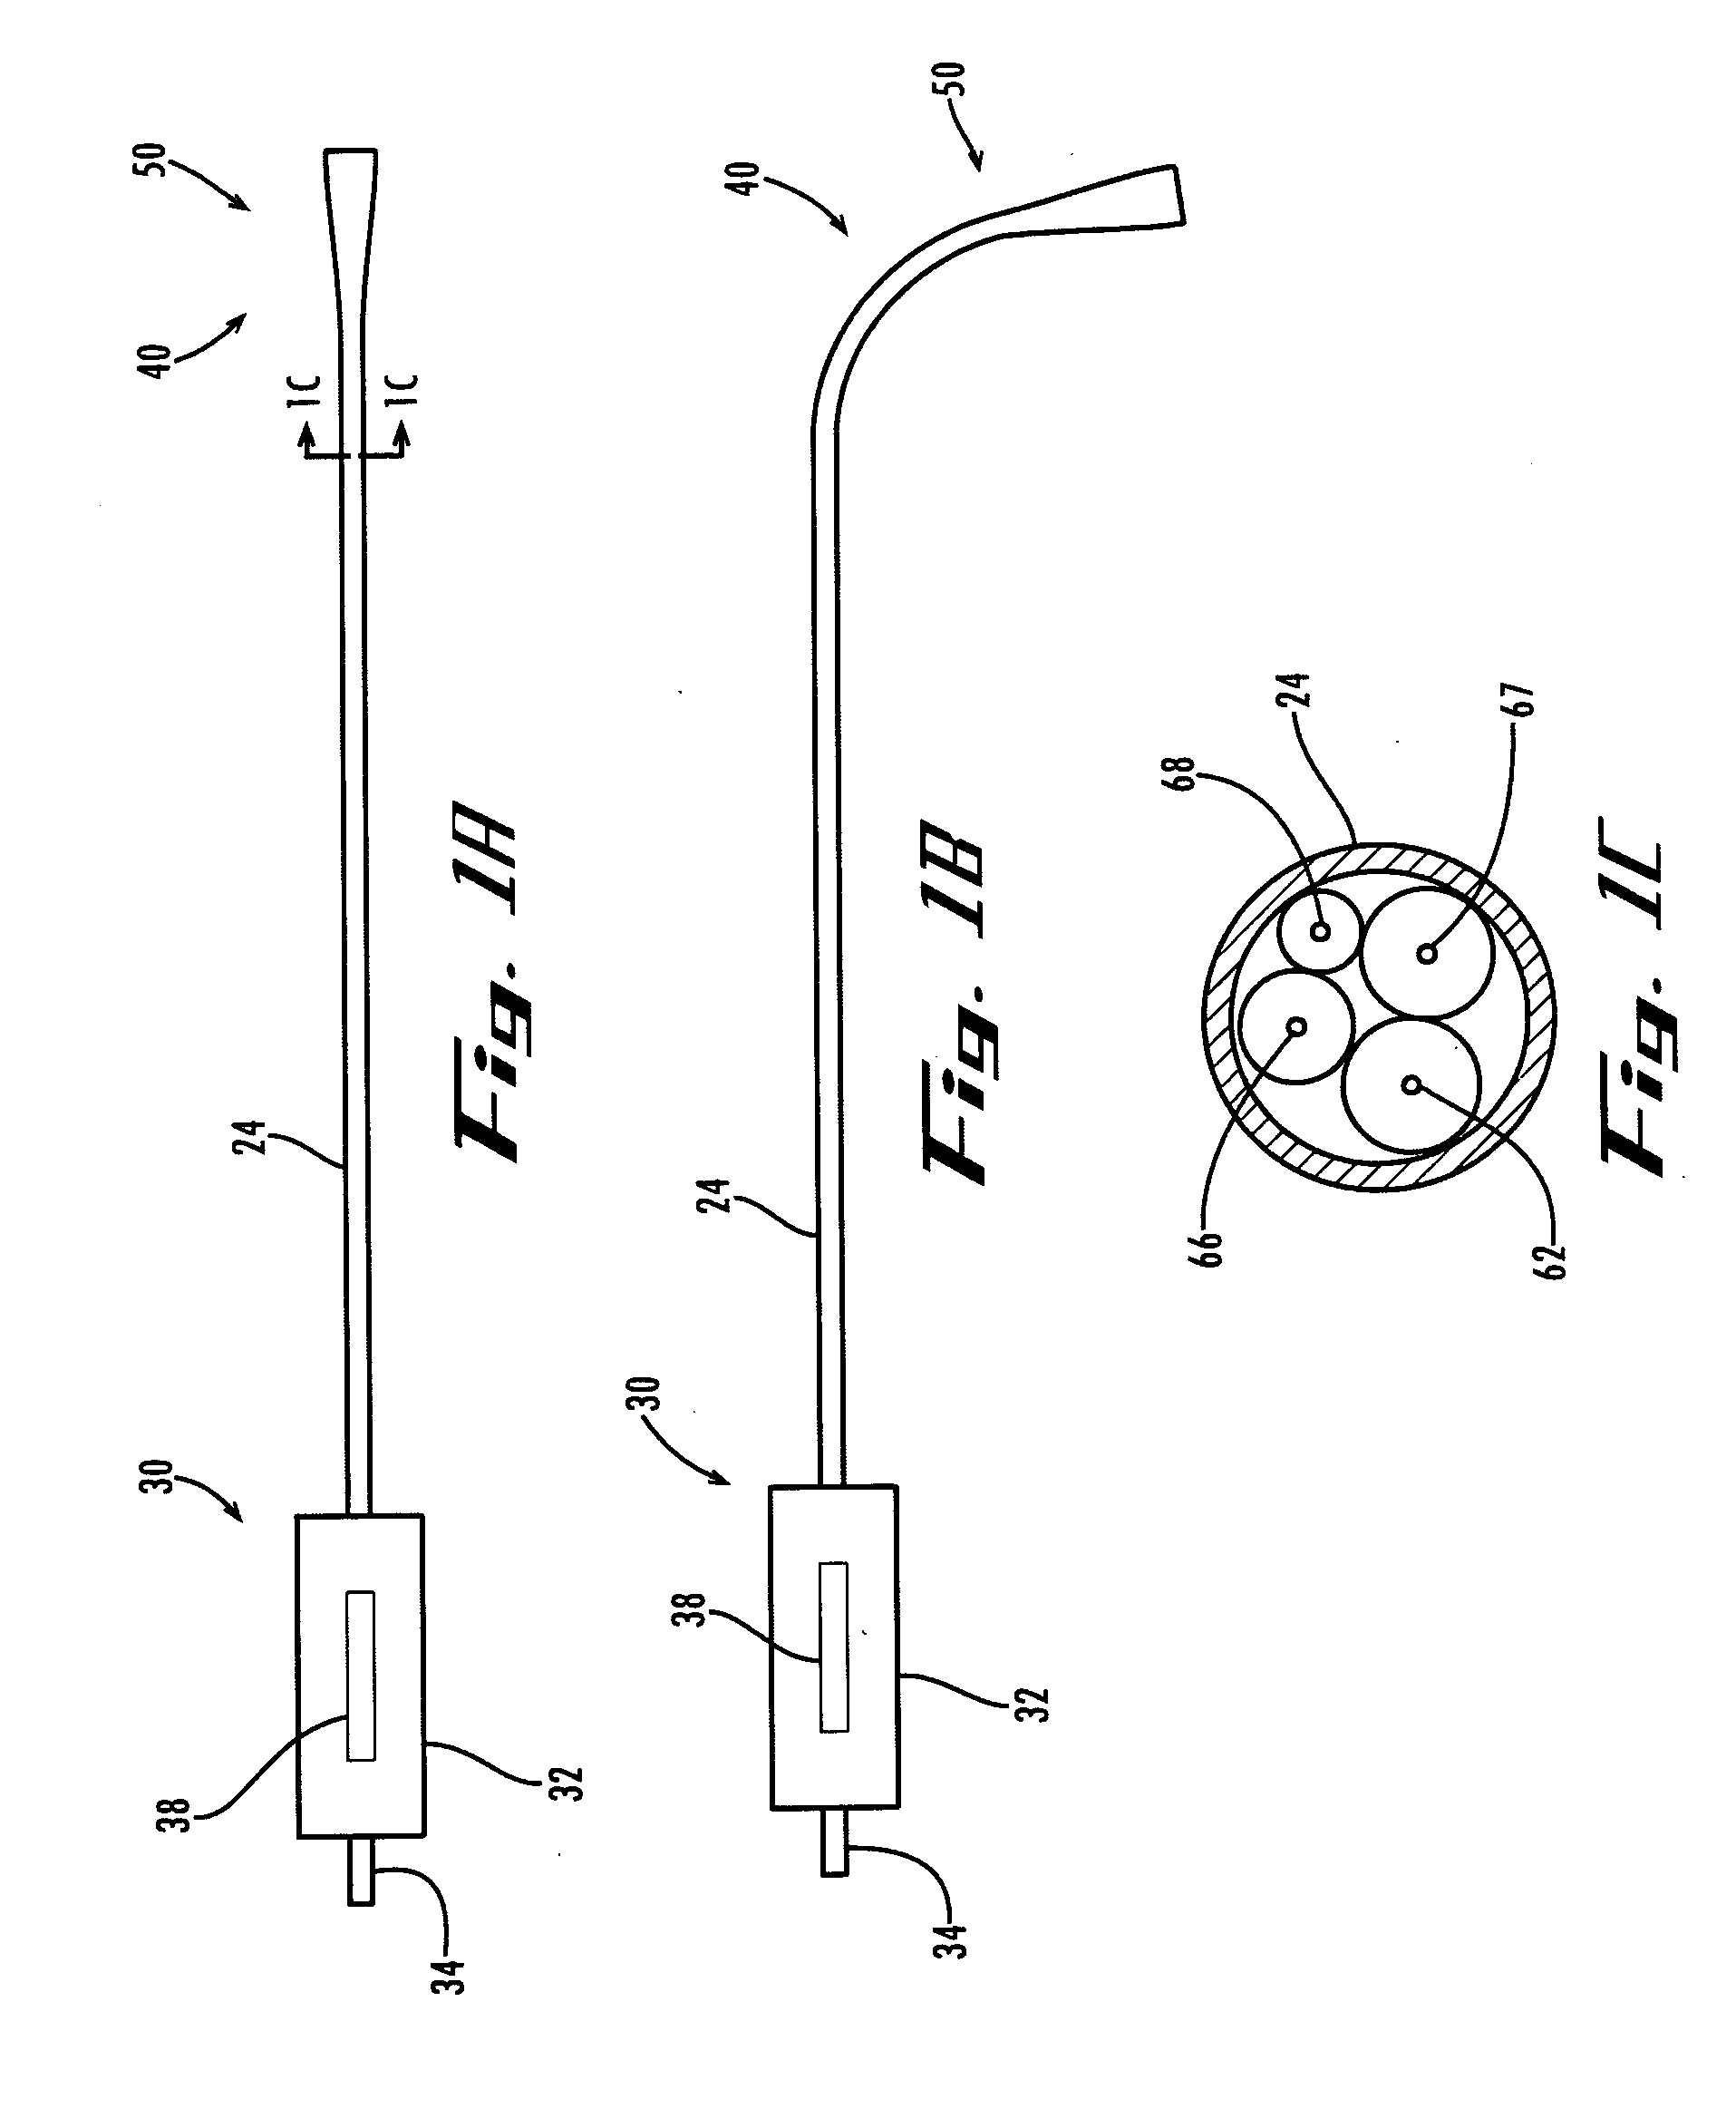 Endoscopic instrument having reduced diameter flexible shaft